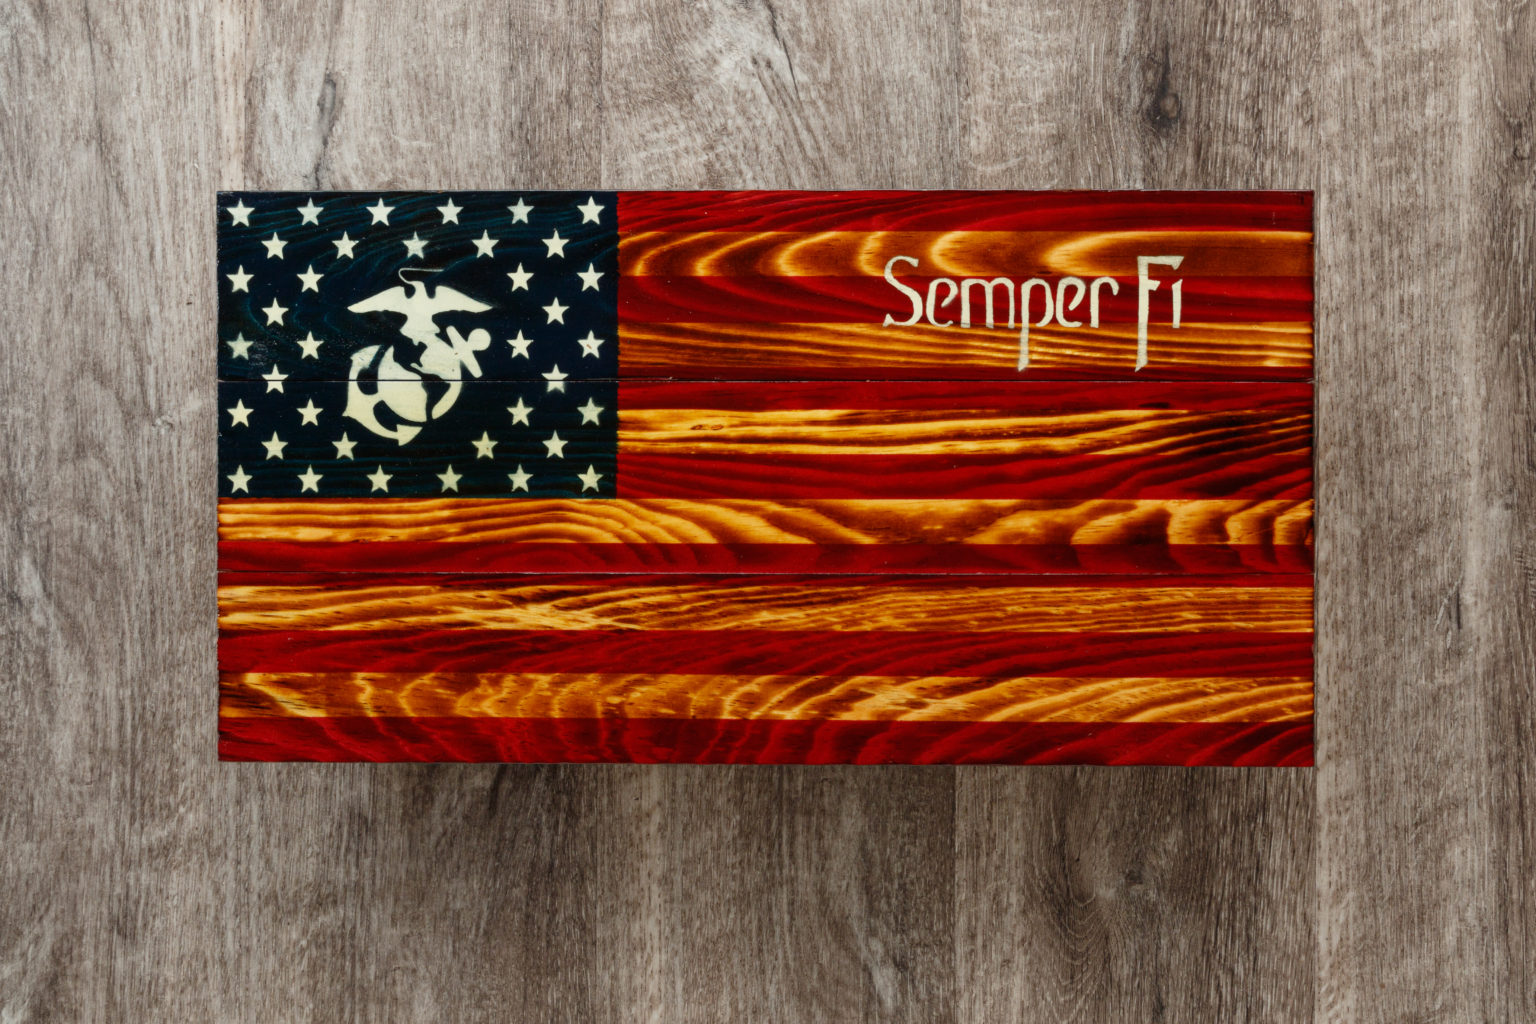 Marines Semper fi wooden American flag wall art